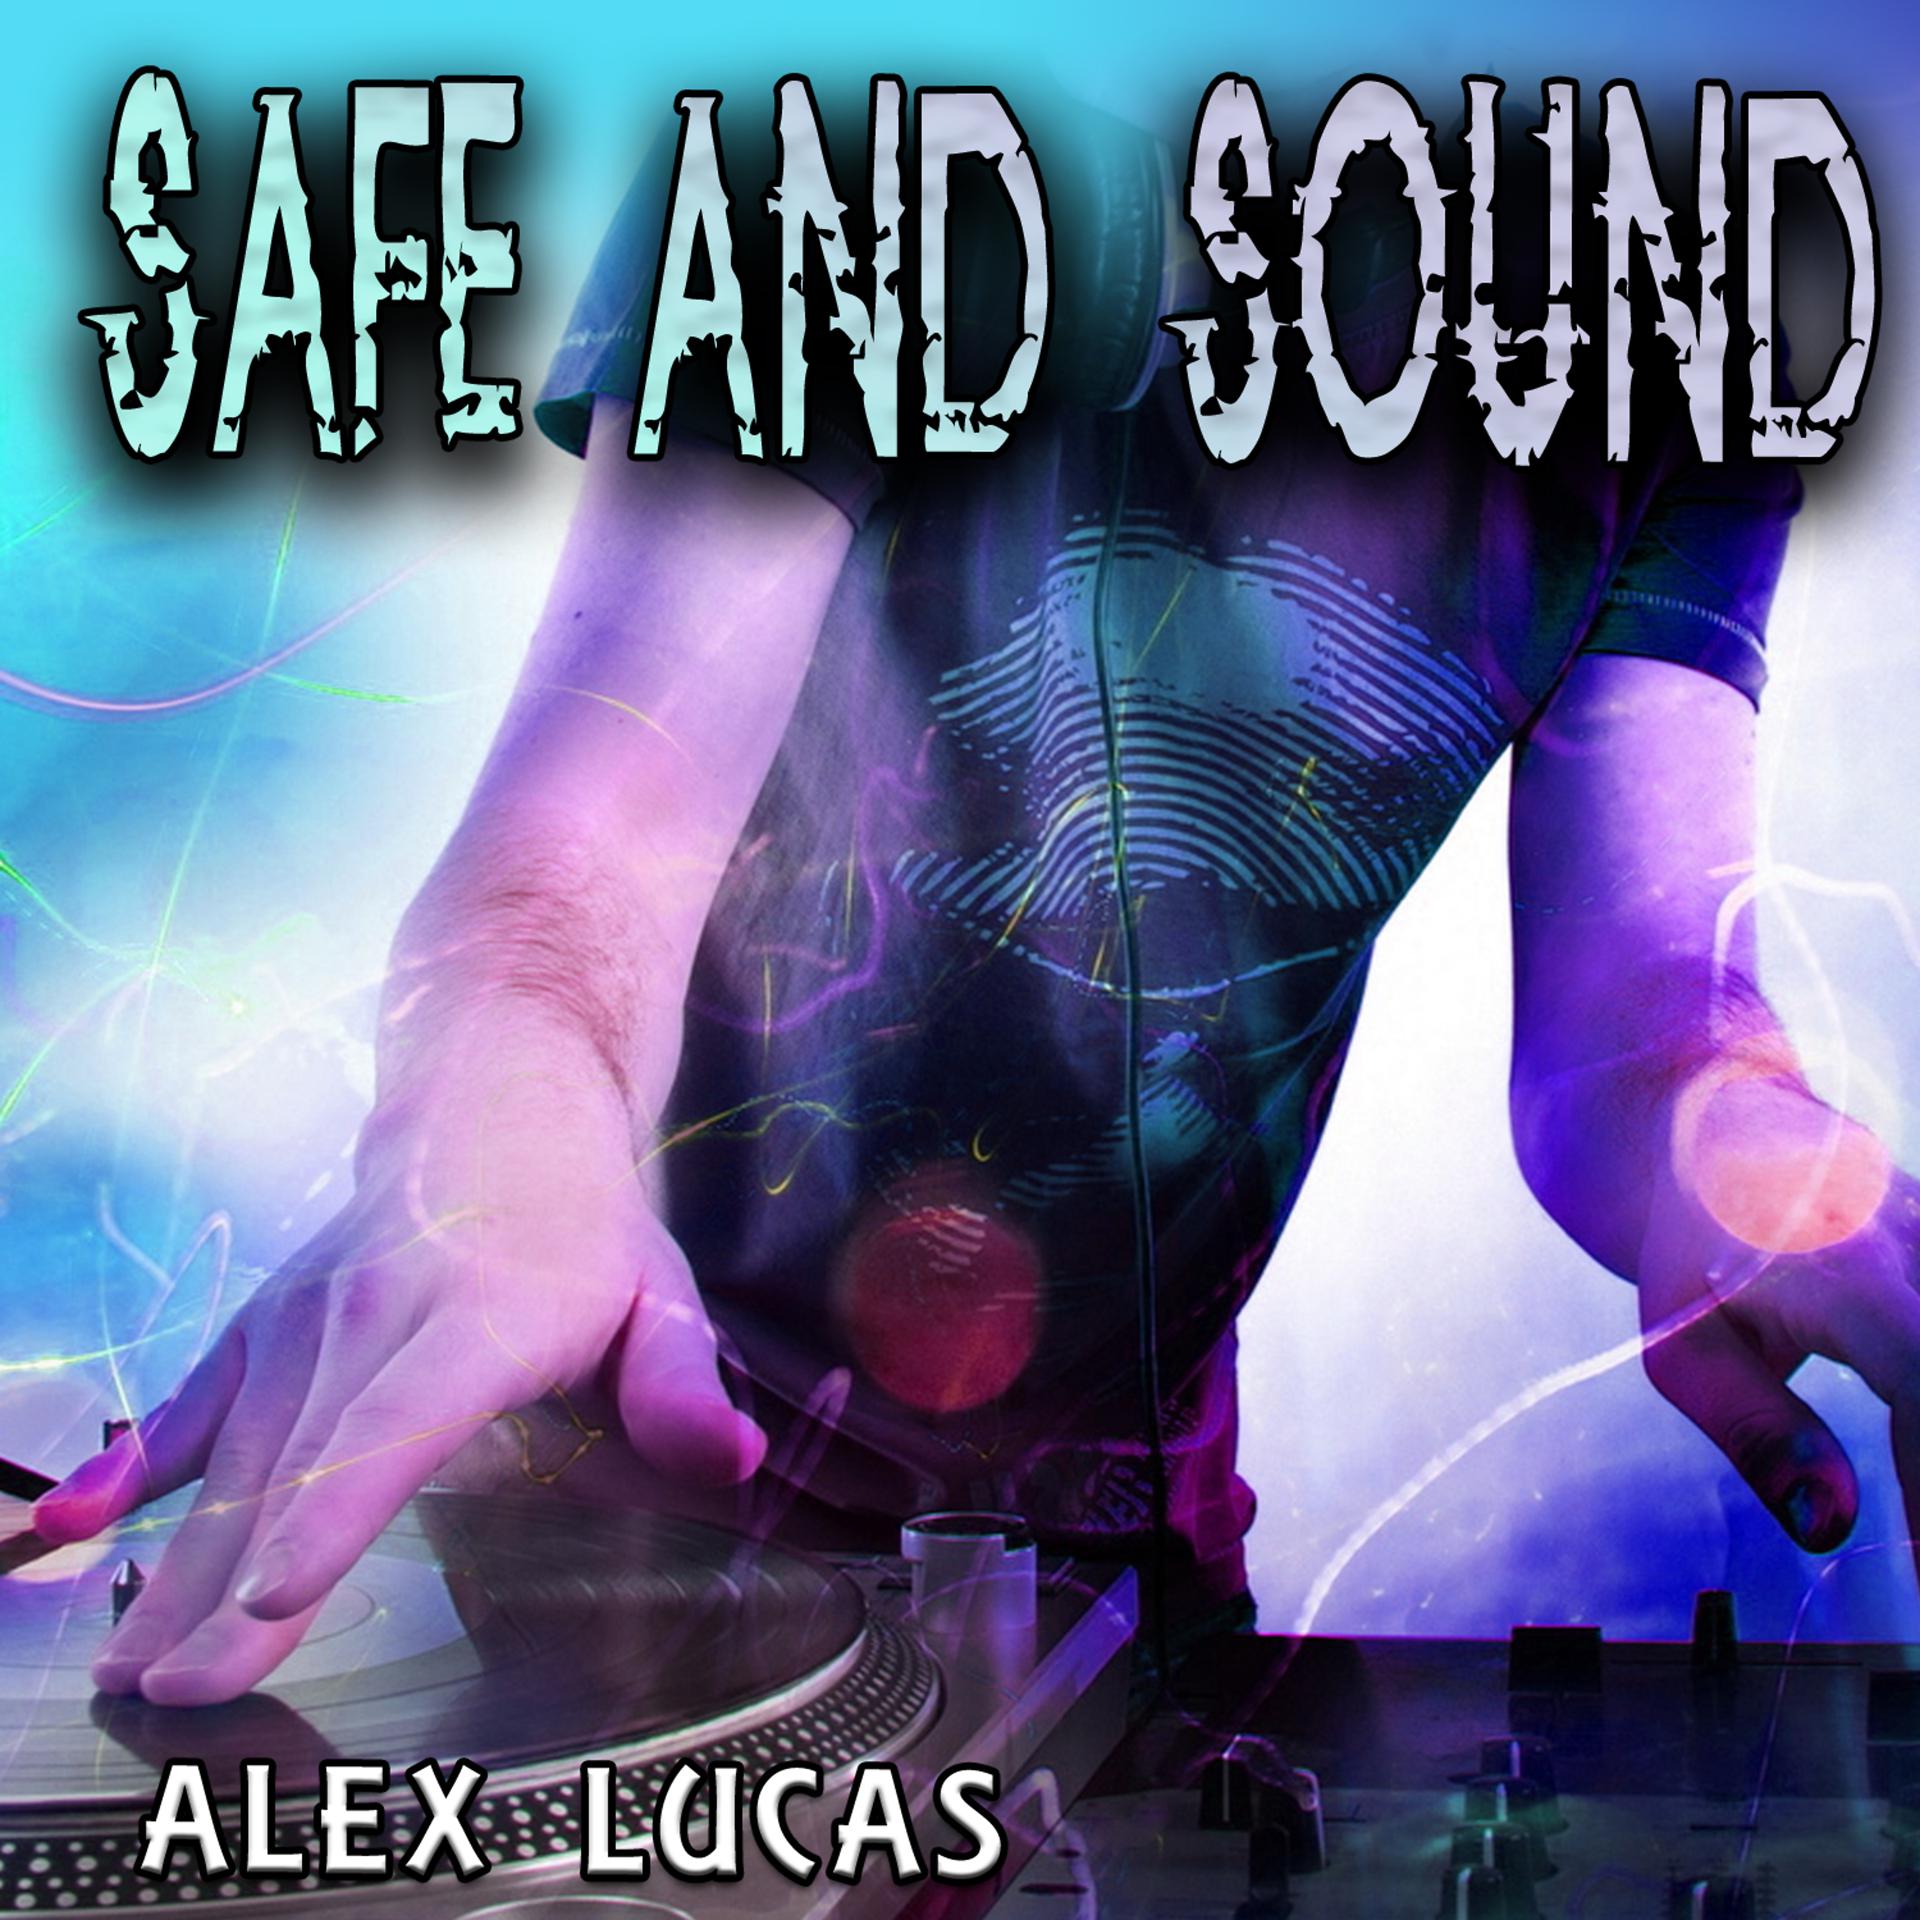 Постер альбома Safe and Sound